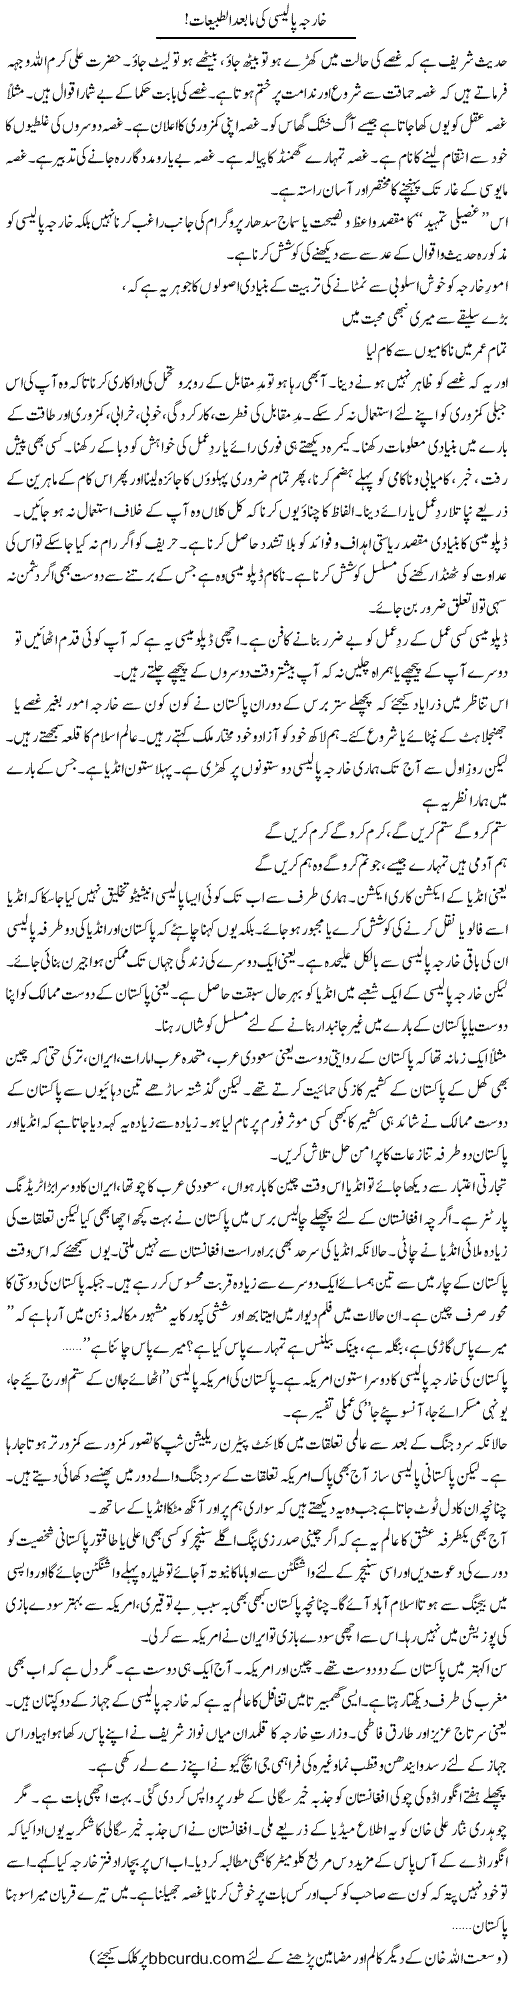 Kharja Policy Ki Mabaad Al Tabiaat! | Wusat Ullah Khan | Daily Urdu Columns